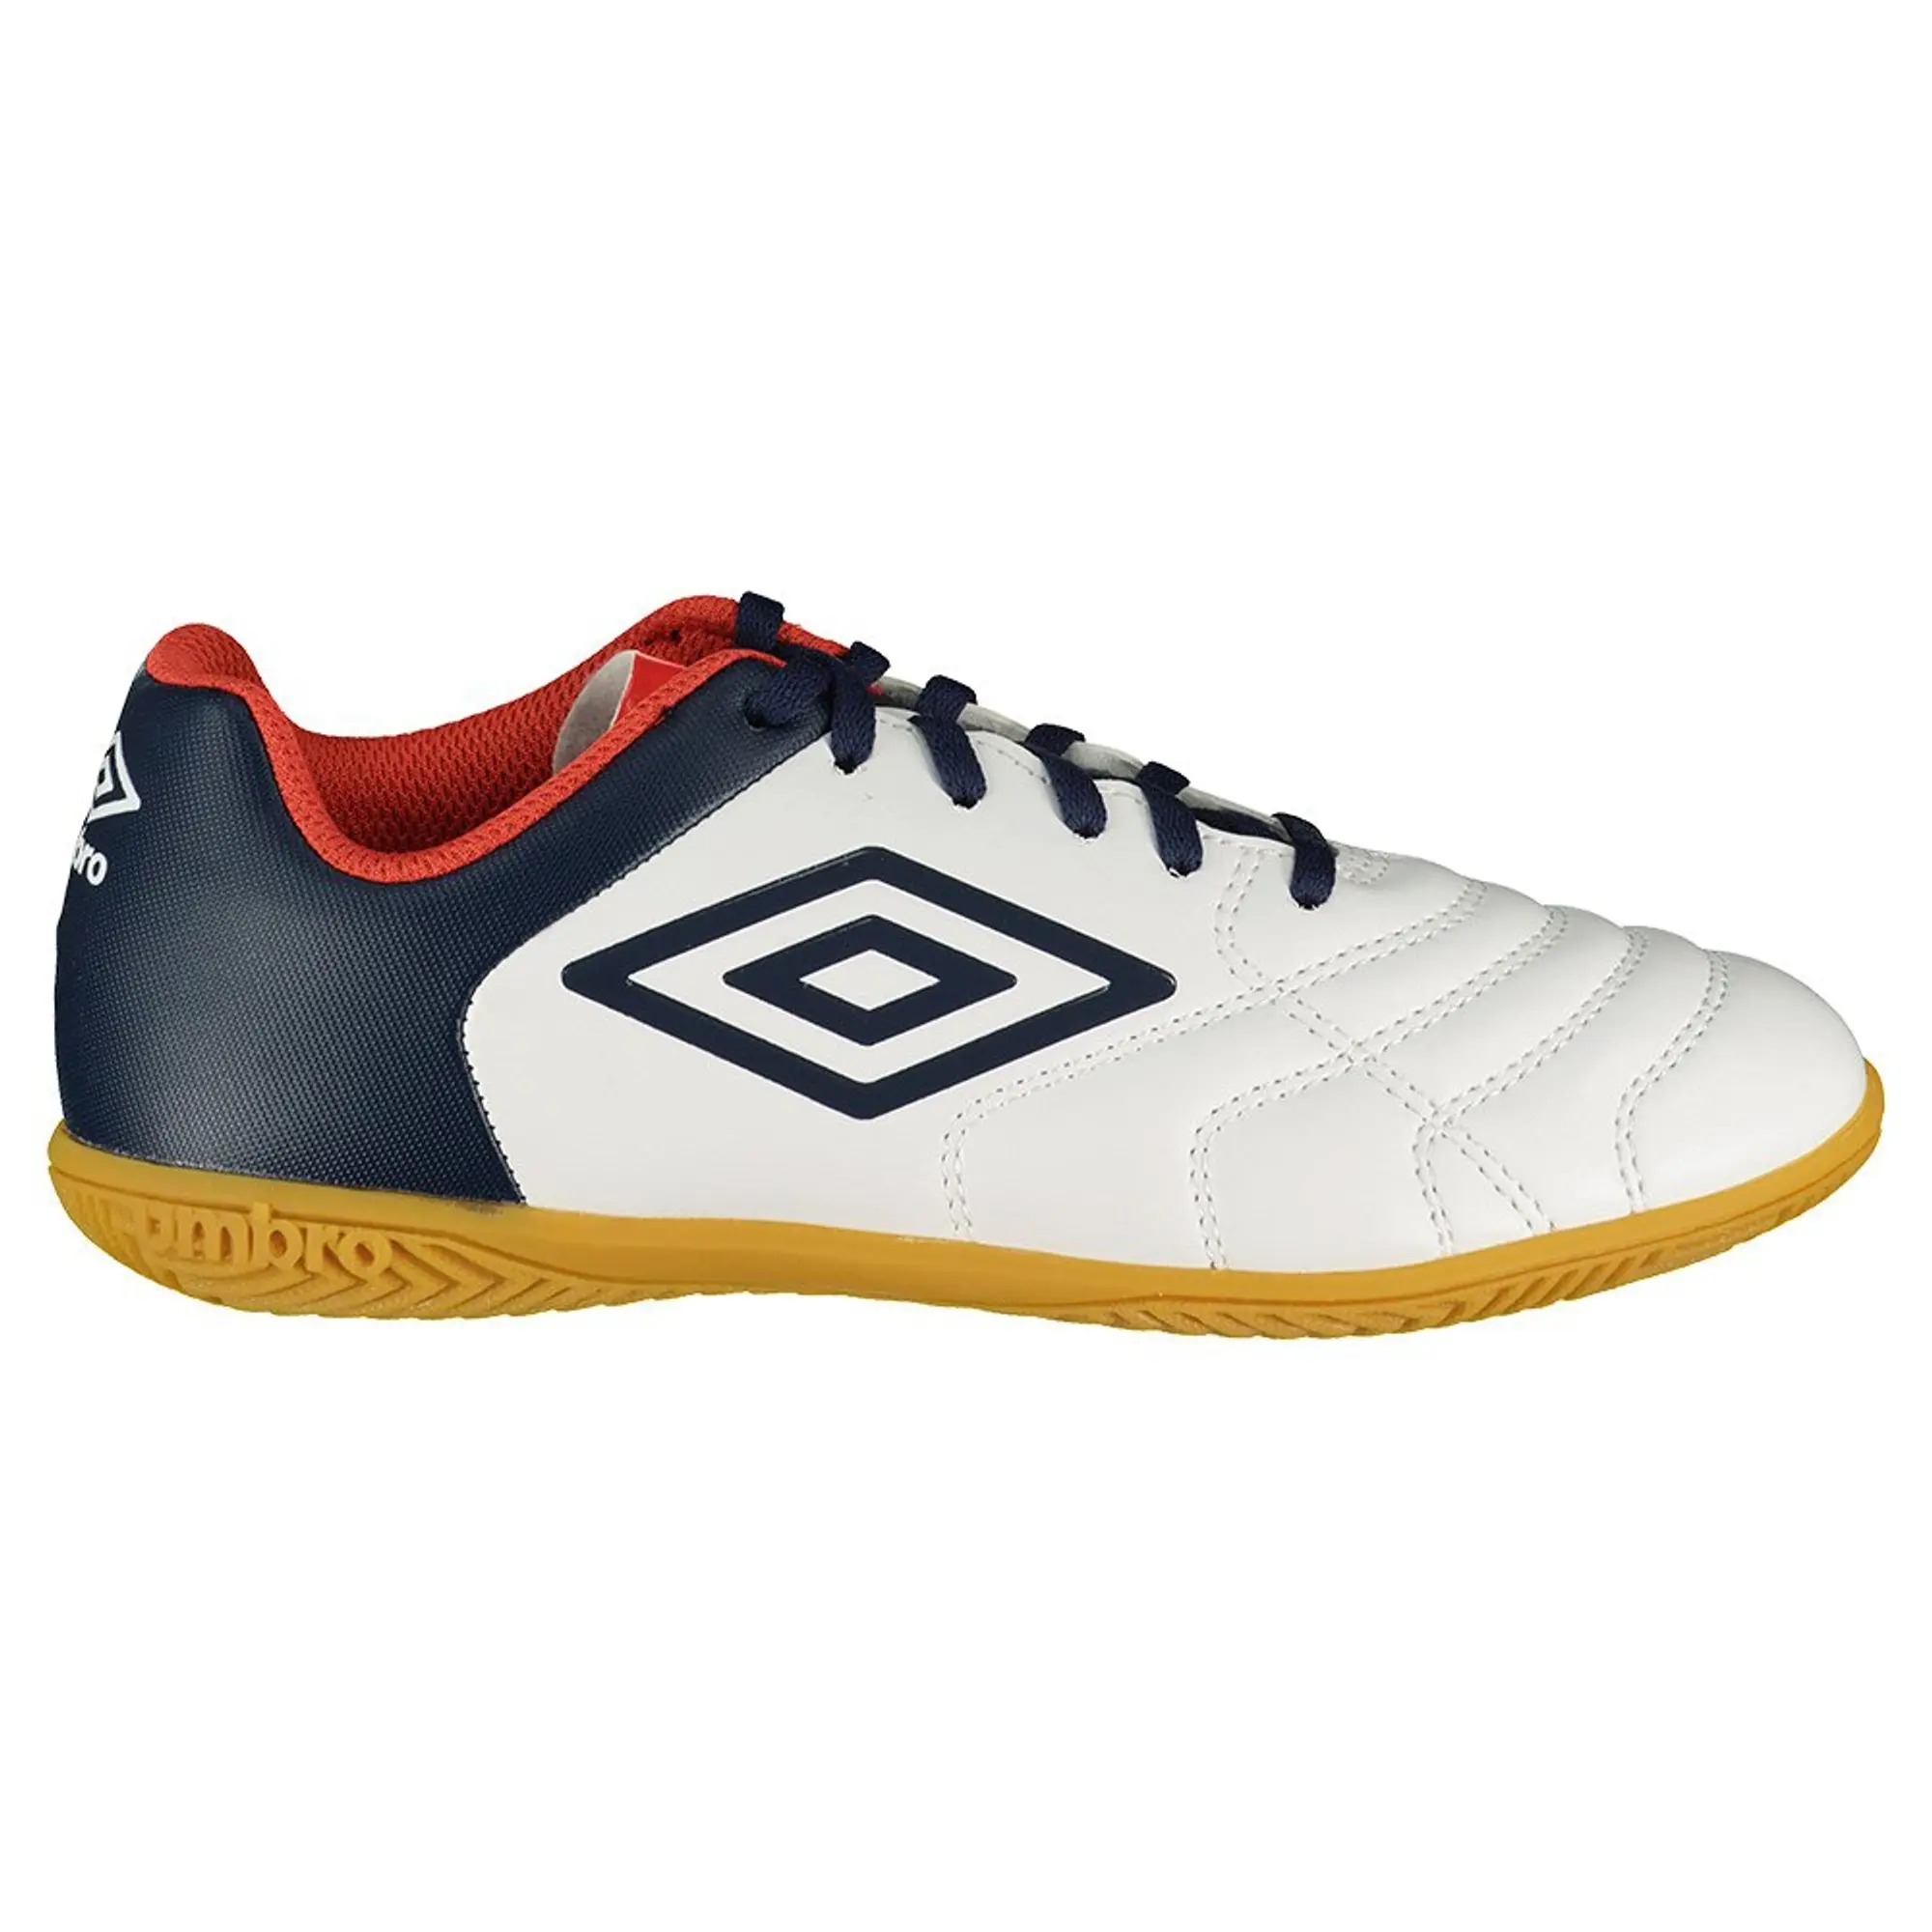 Umbro Classico Xi Ic Football Boots  EU 38 1/2 -